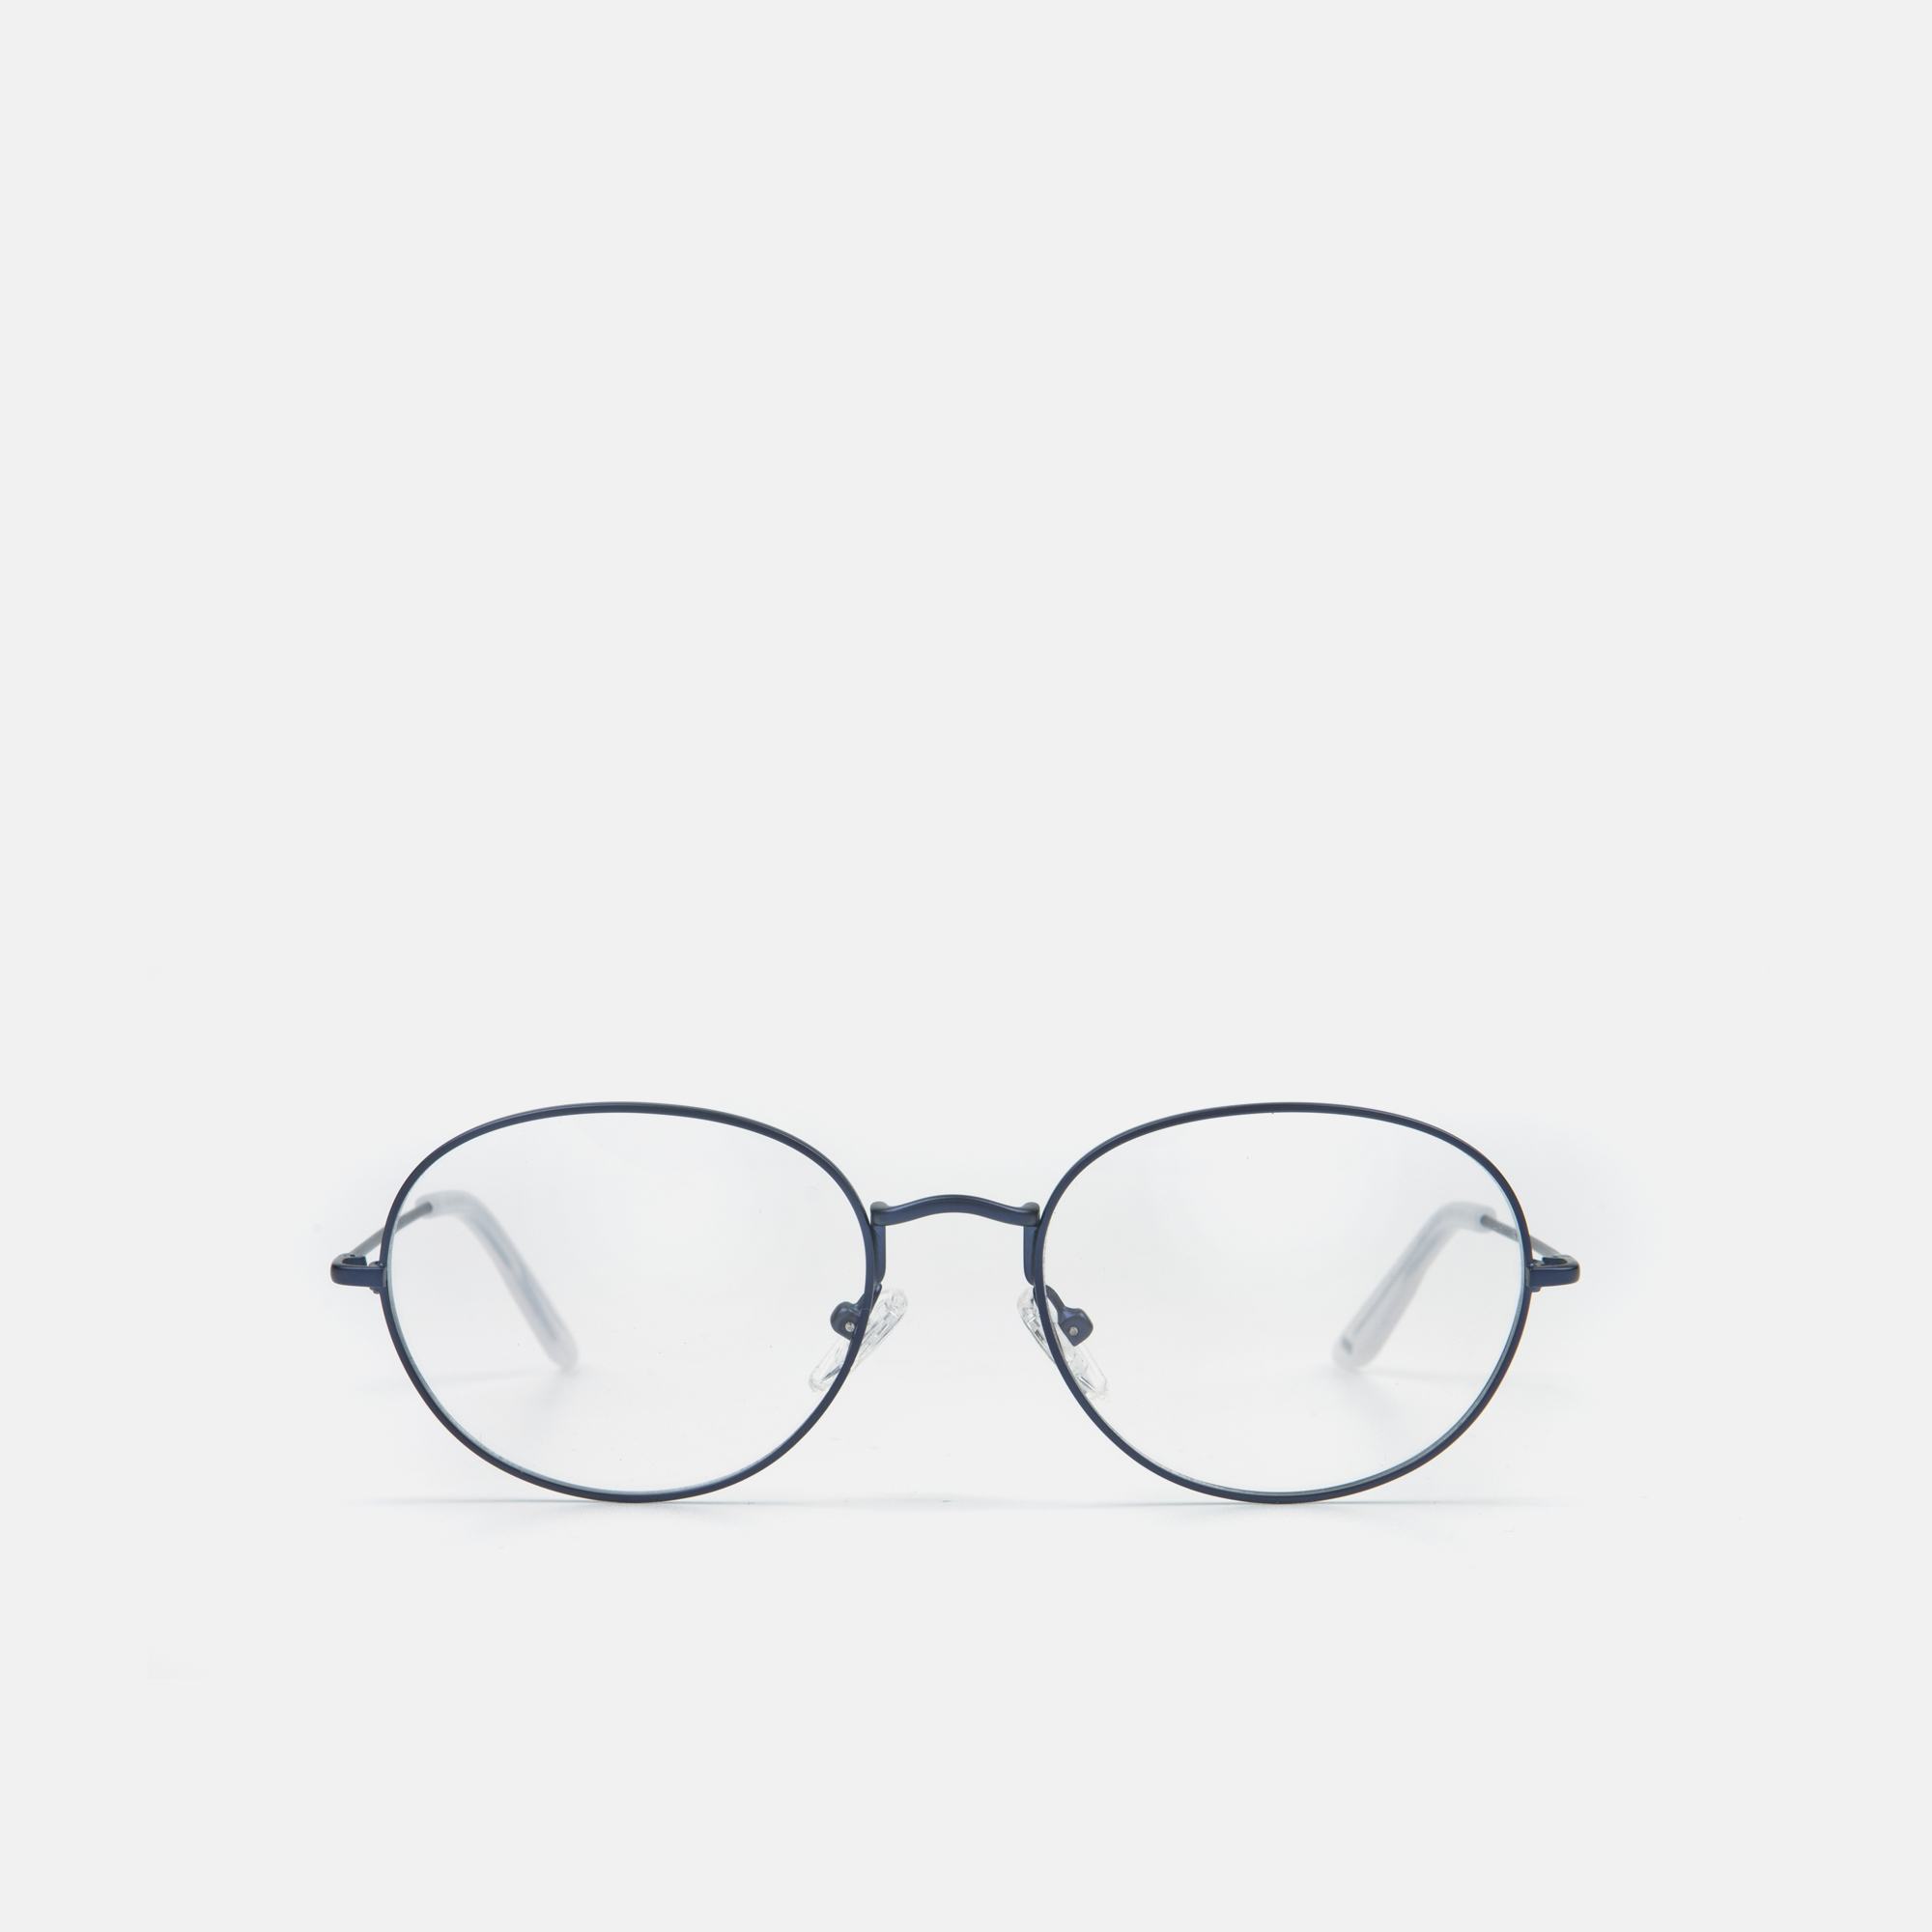 mó UPPER gafas graduadas - Multiopticas